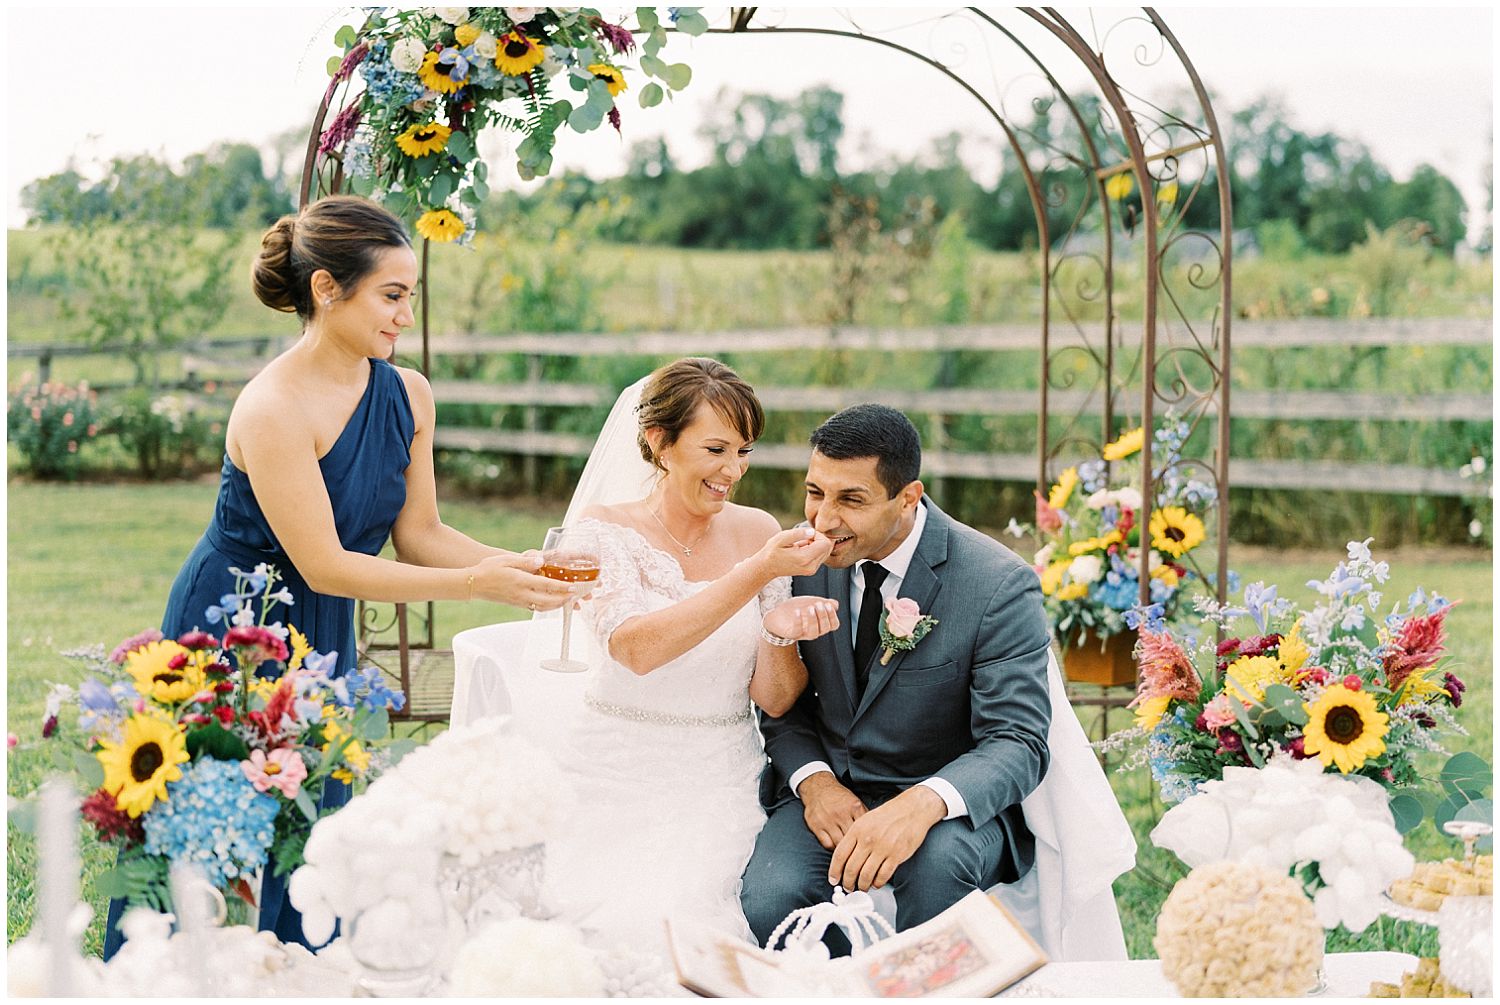 Persian wedding ceremony at Rocklands Farm